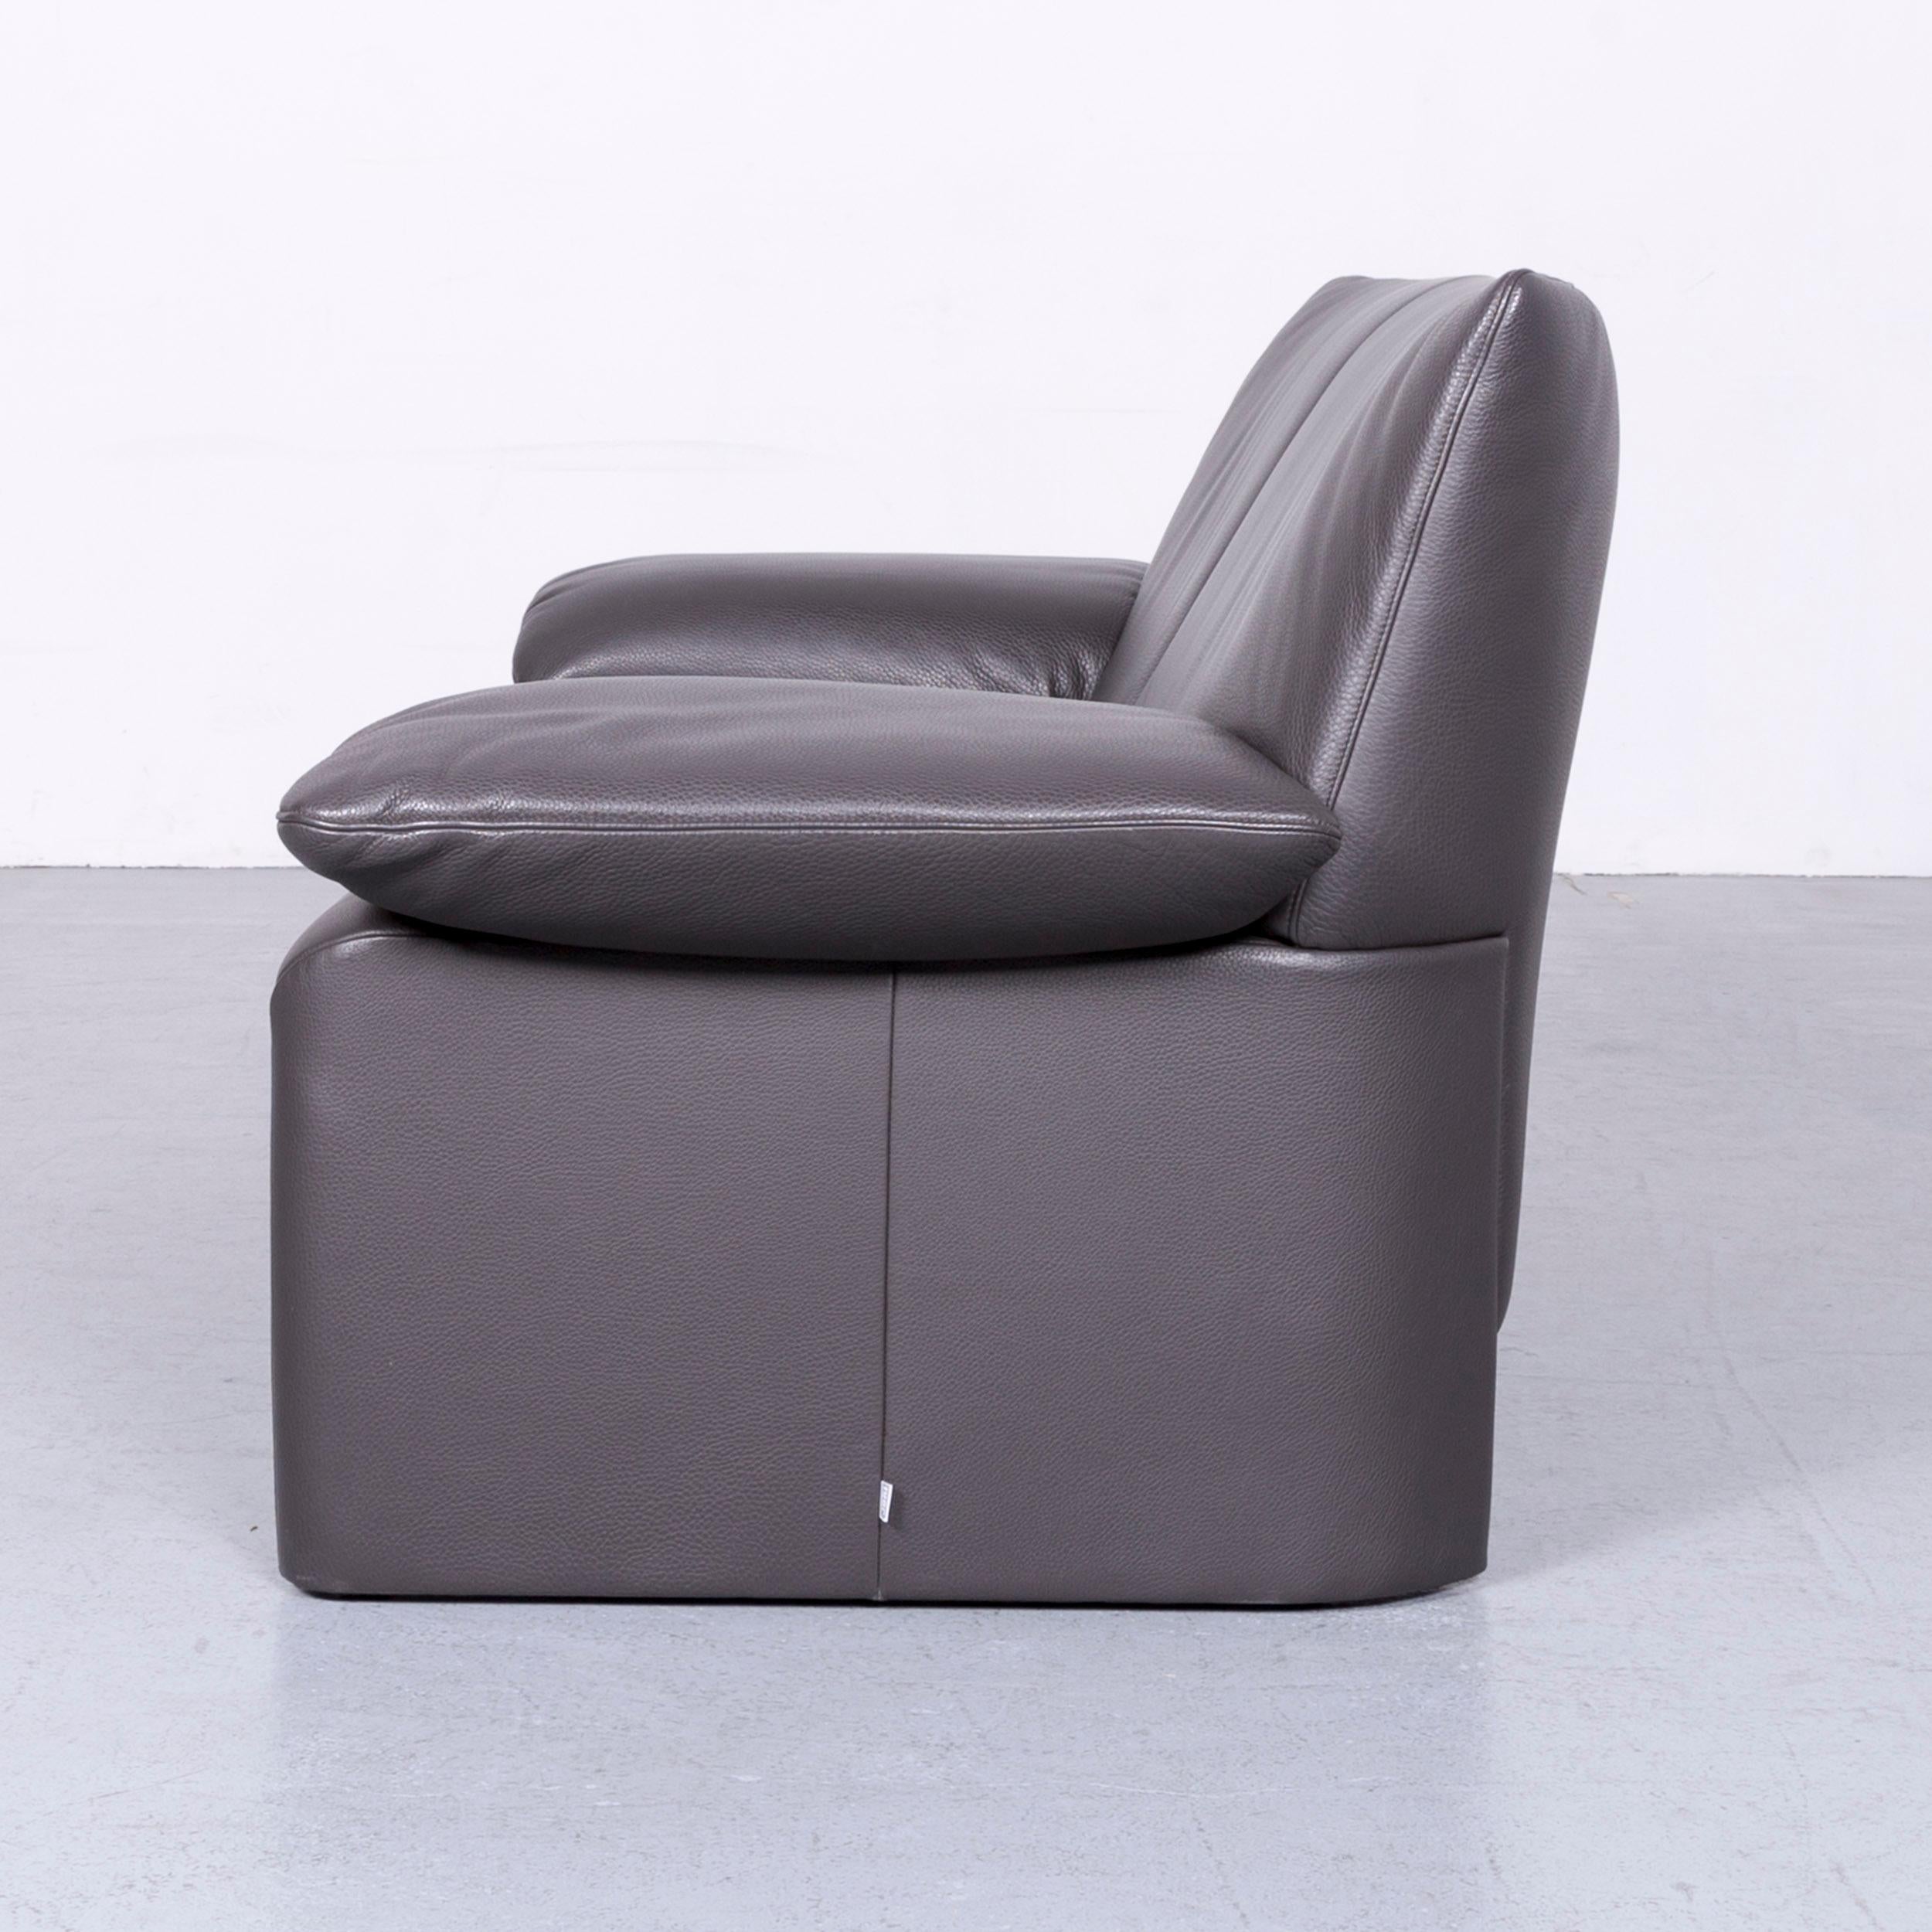 Jori Linea Designer Leather Sofa Foot-Stool Set Grey Two-Seat Couch  5